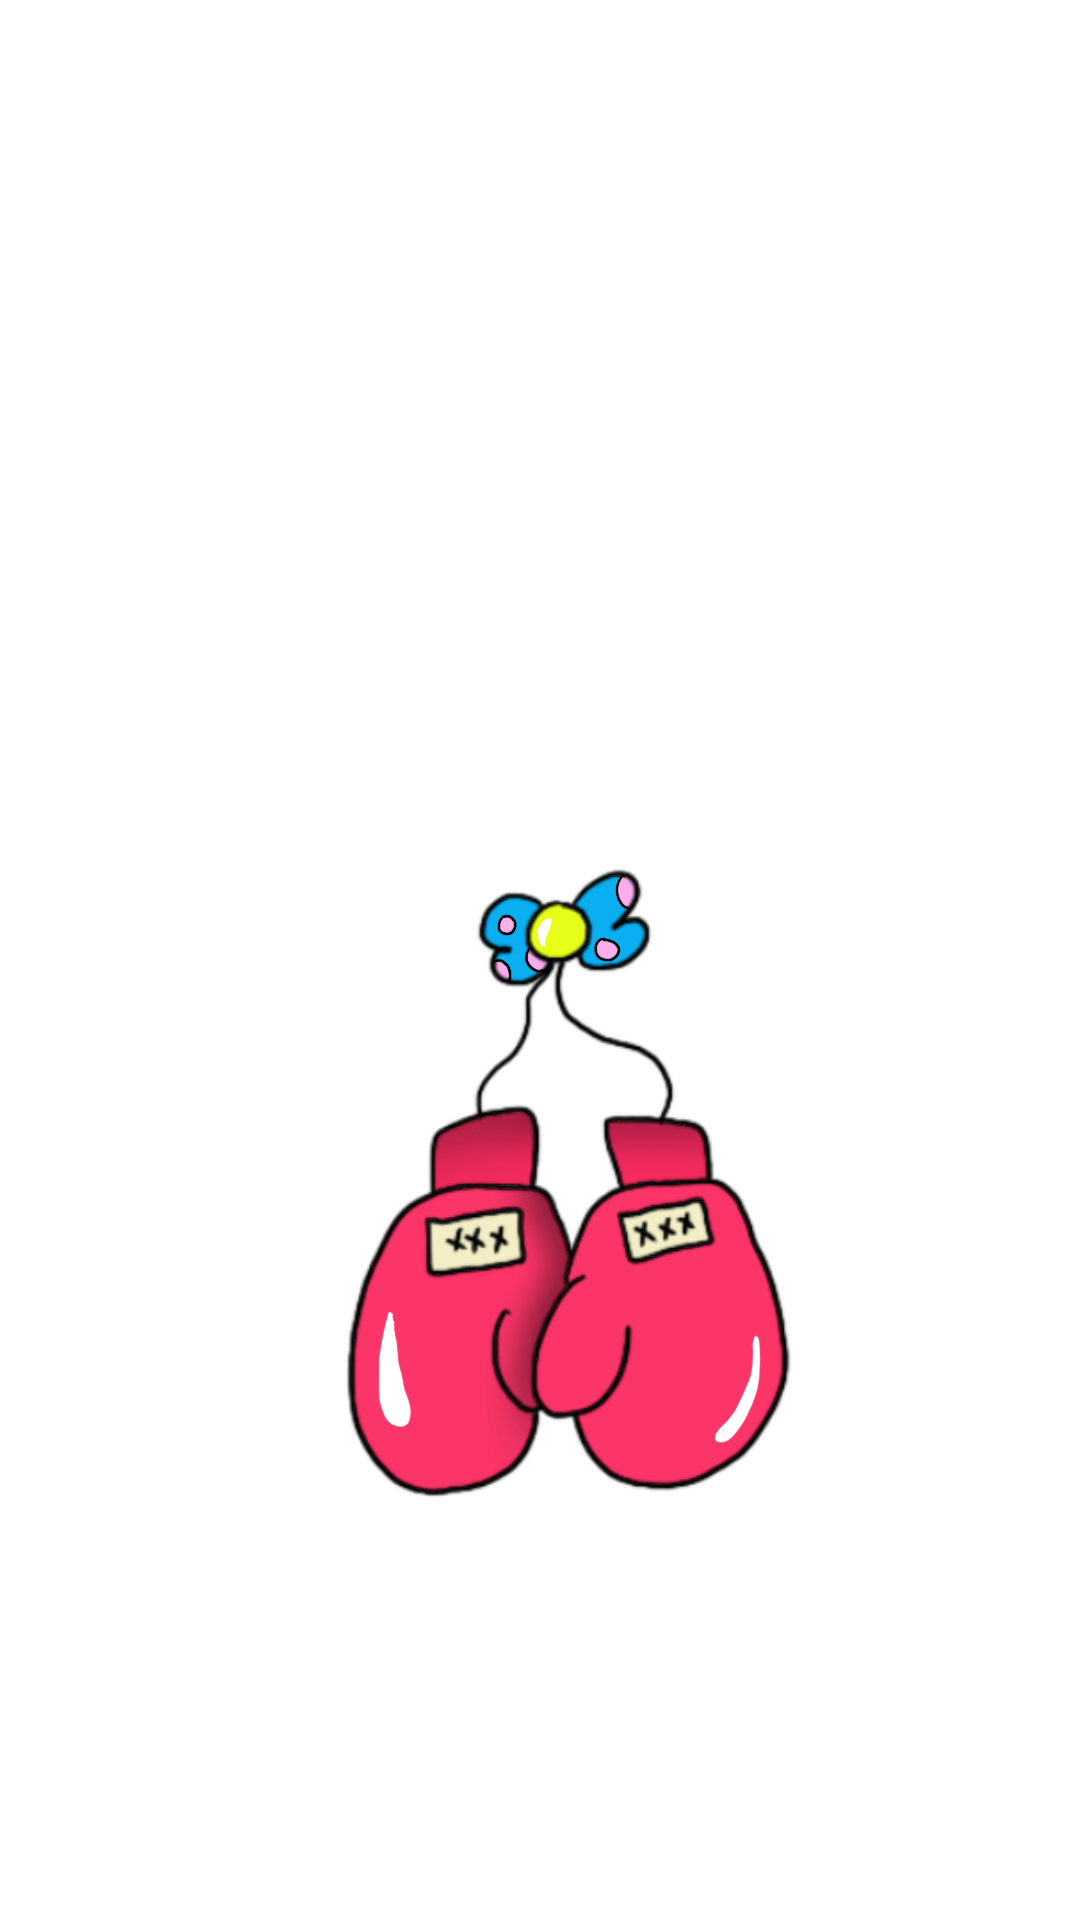 Boxing gloves phone wallpaper